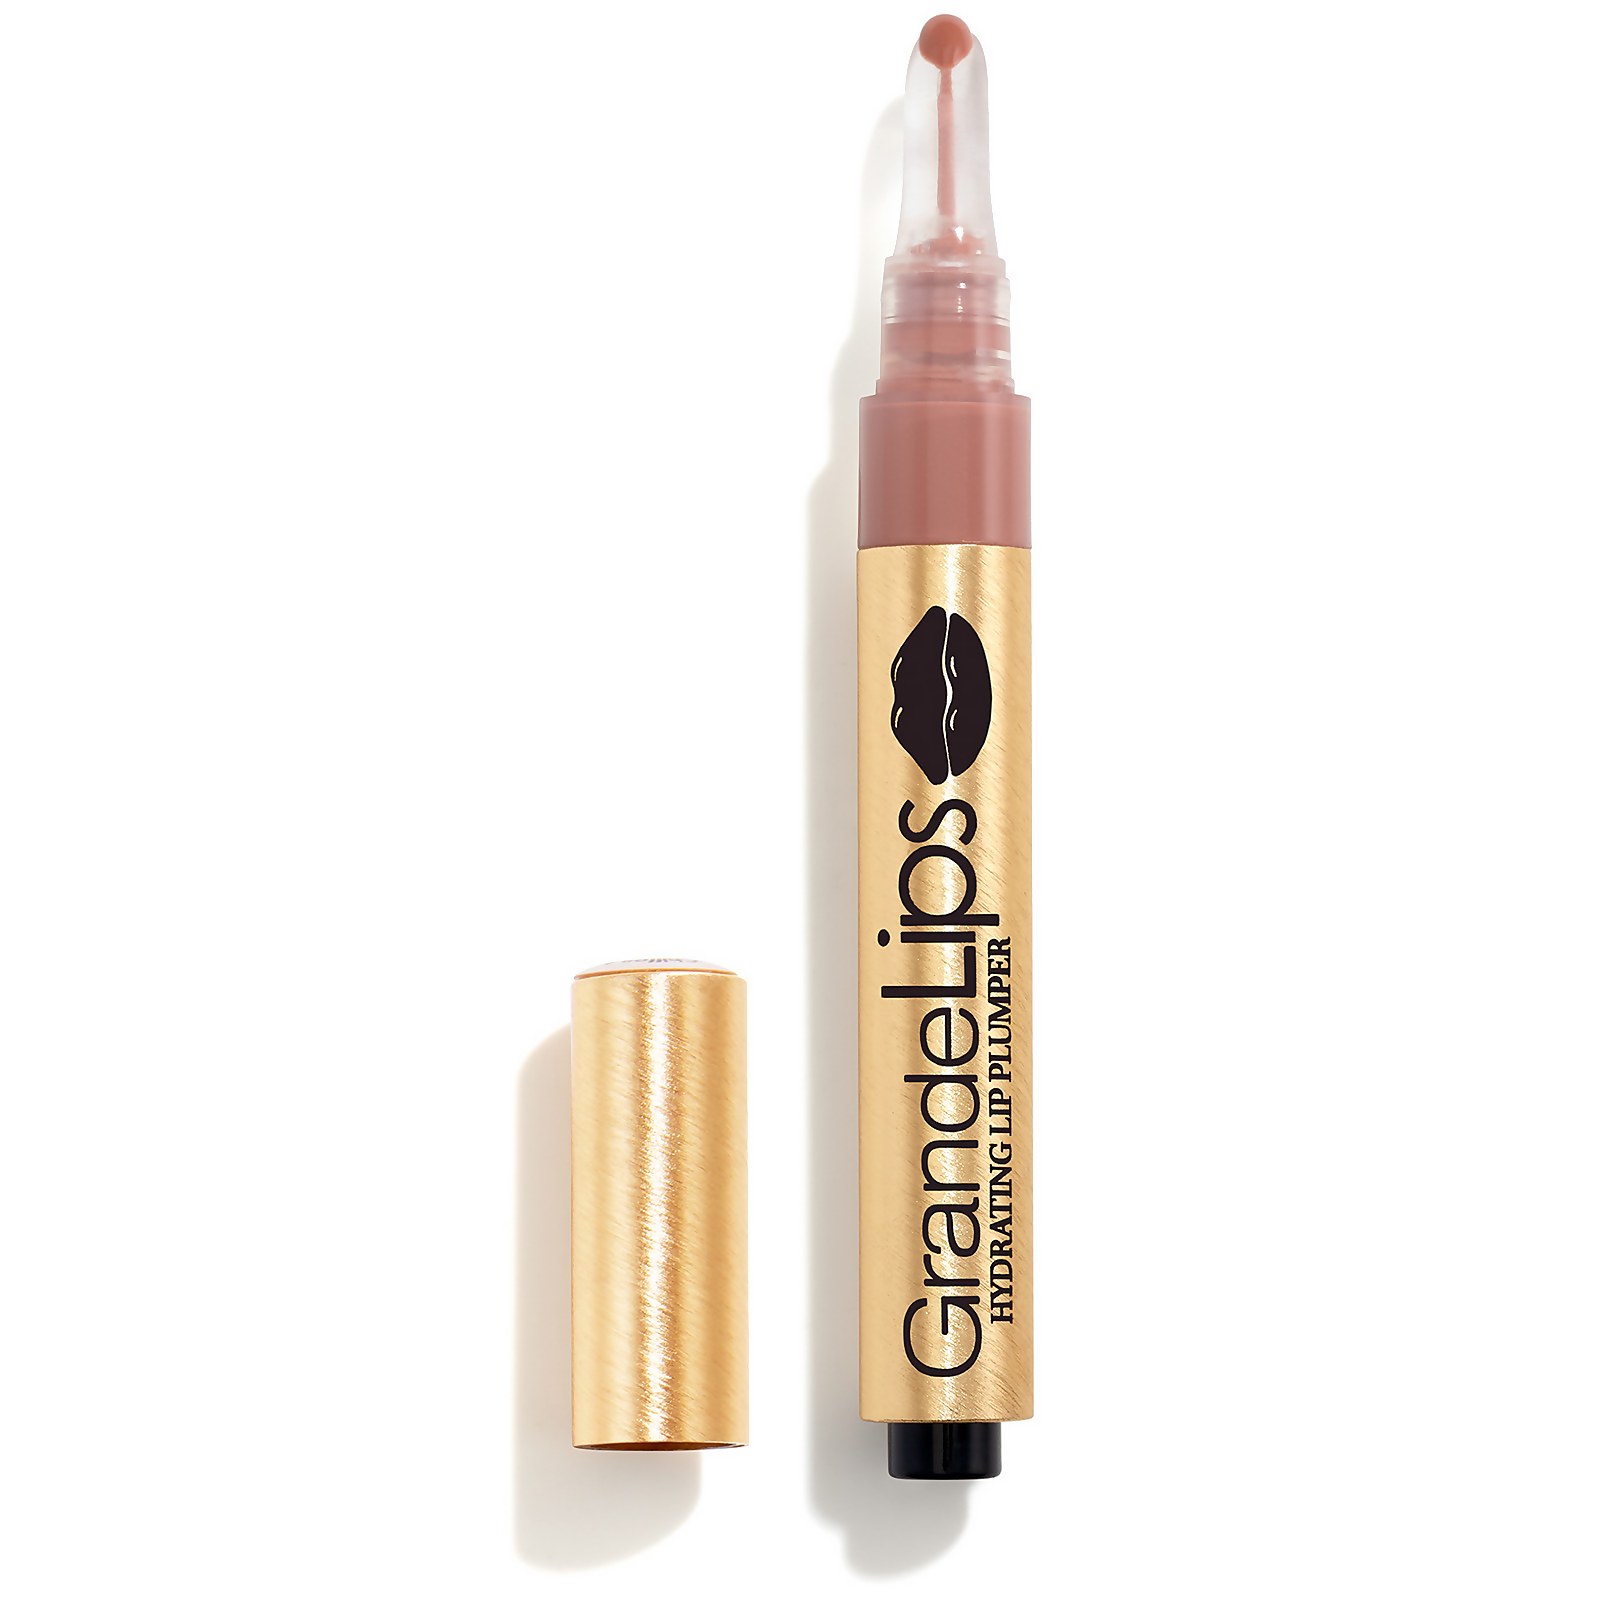 Grande Cosmetics Grandelips Hydrating Lip Plumper Gloss 2.4ml (various Shades) In Sunbaked Sedona